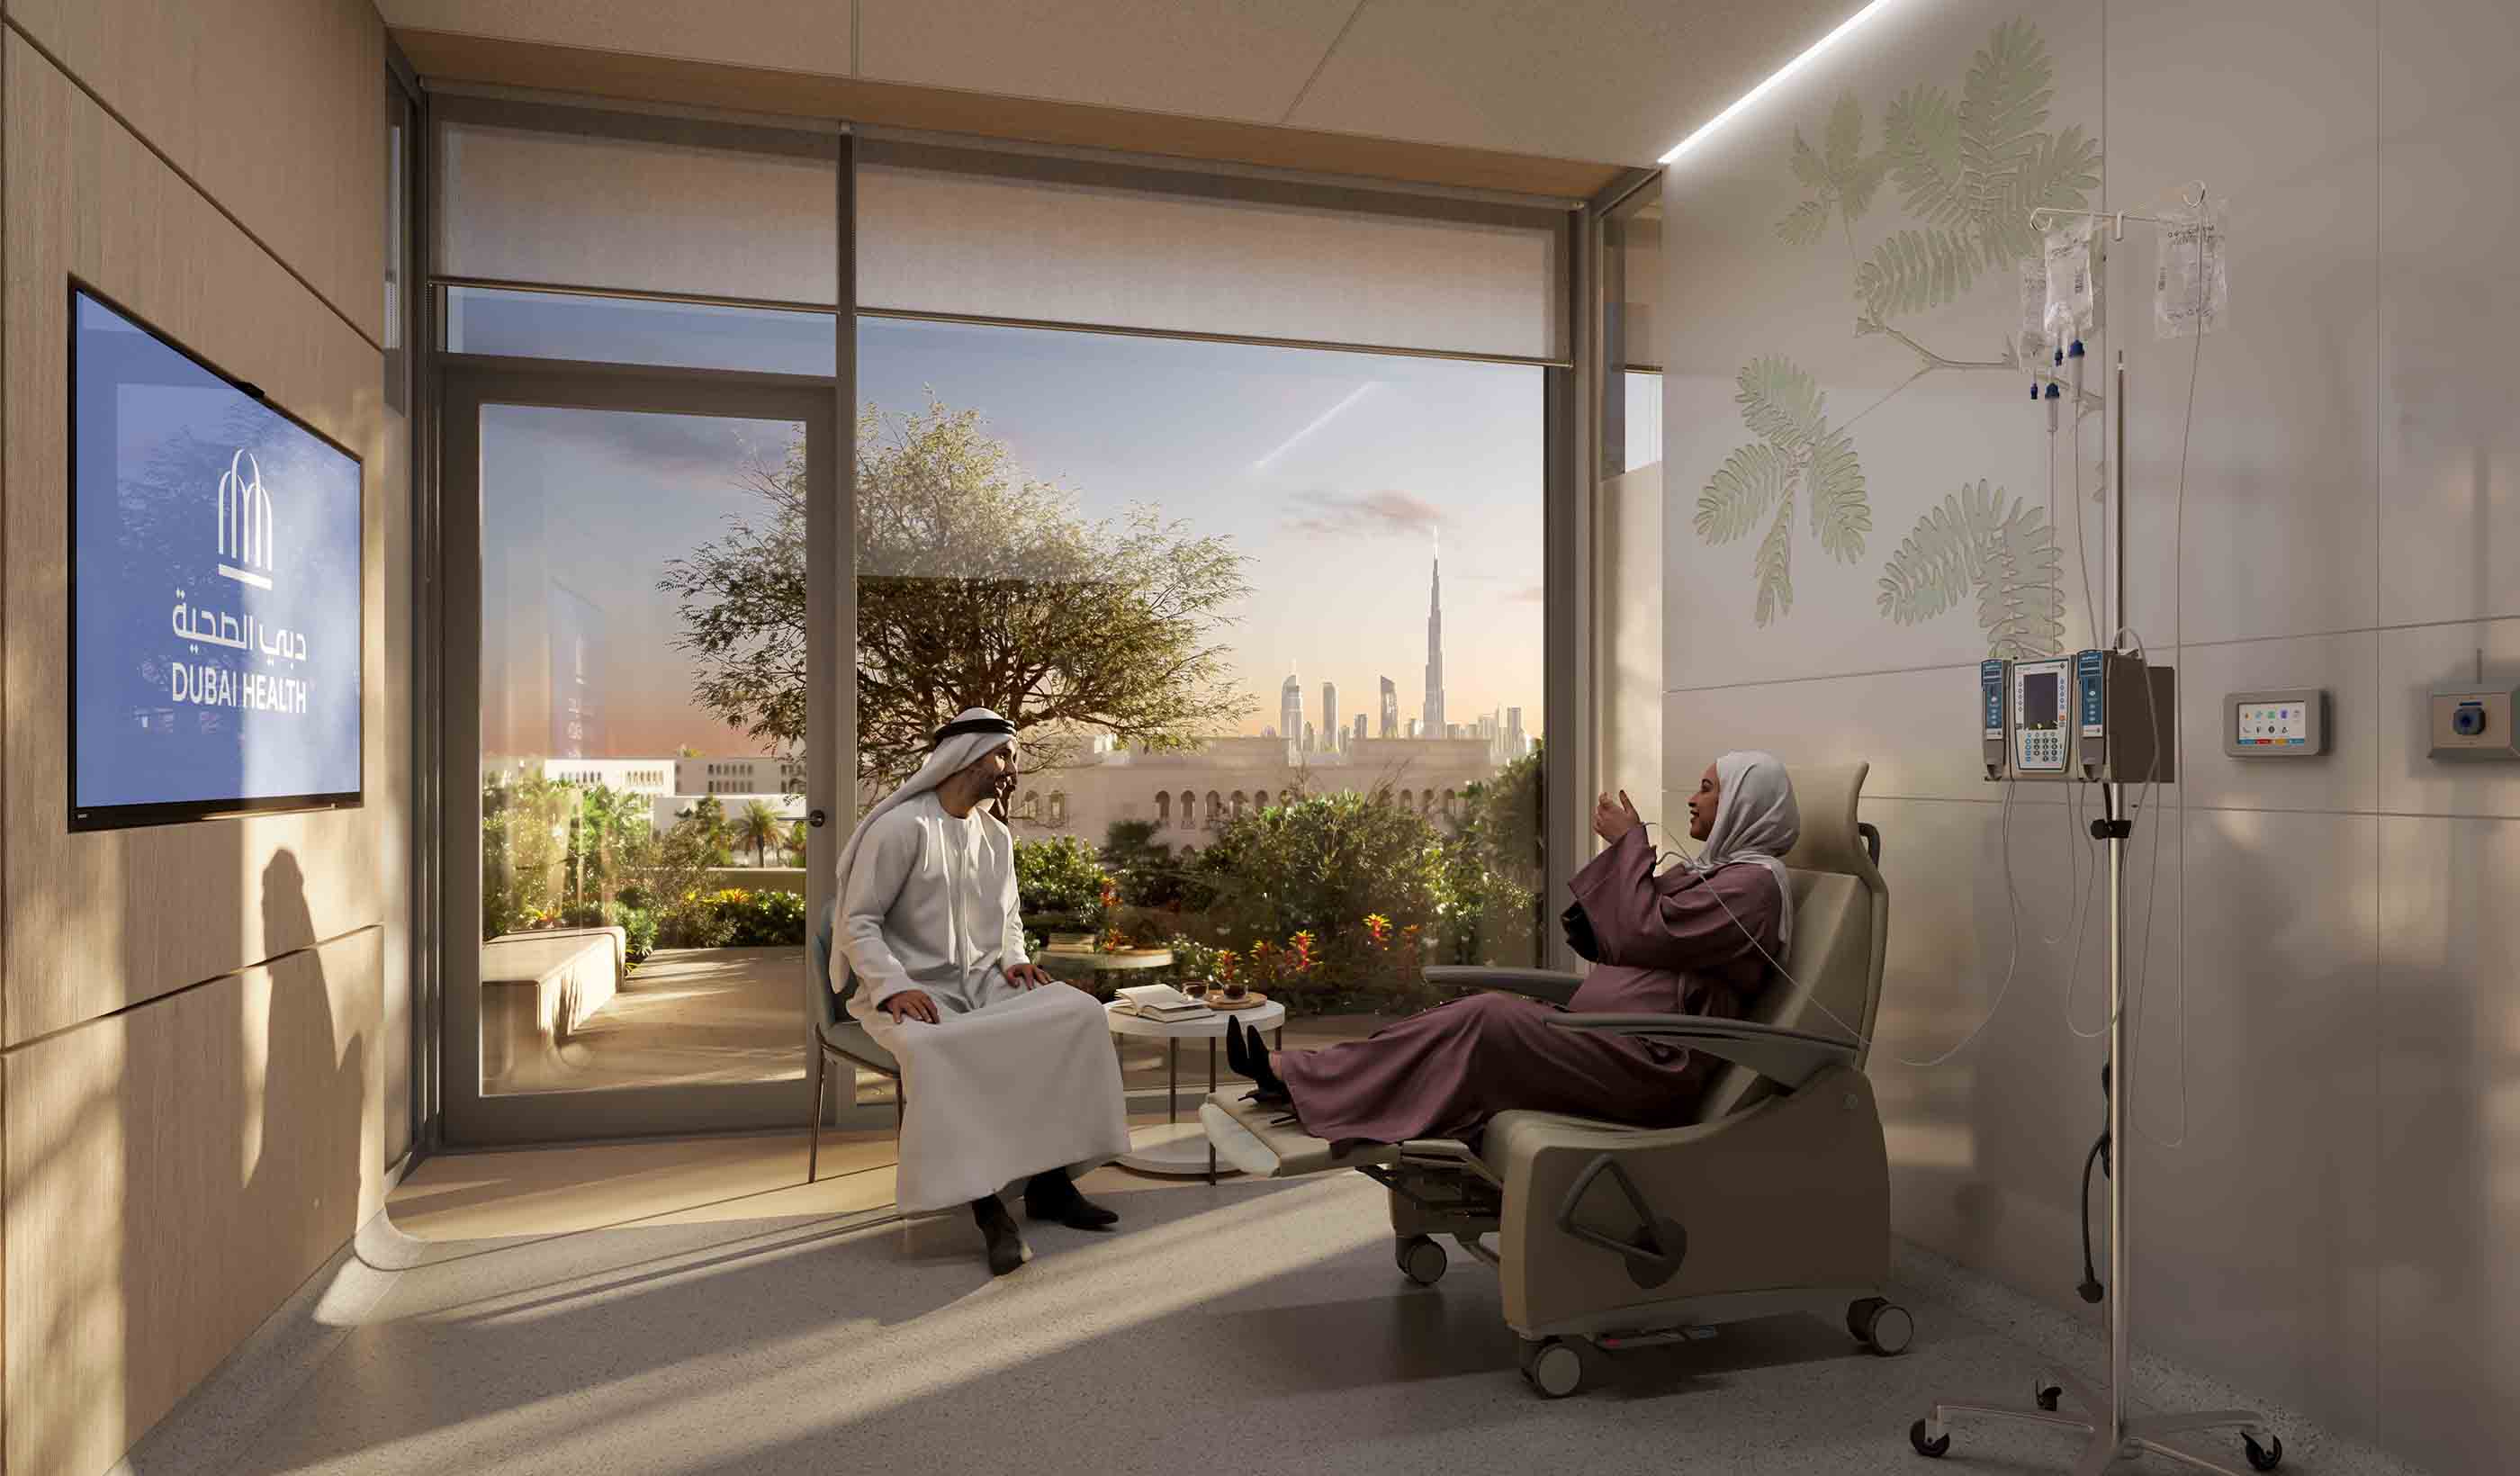 Hamdan Bin Rashid Cancer Hospital, Dubai, design by Stantec